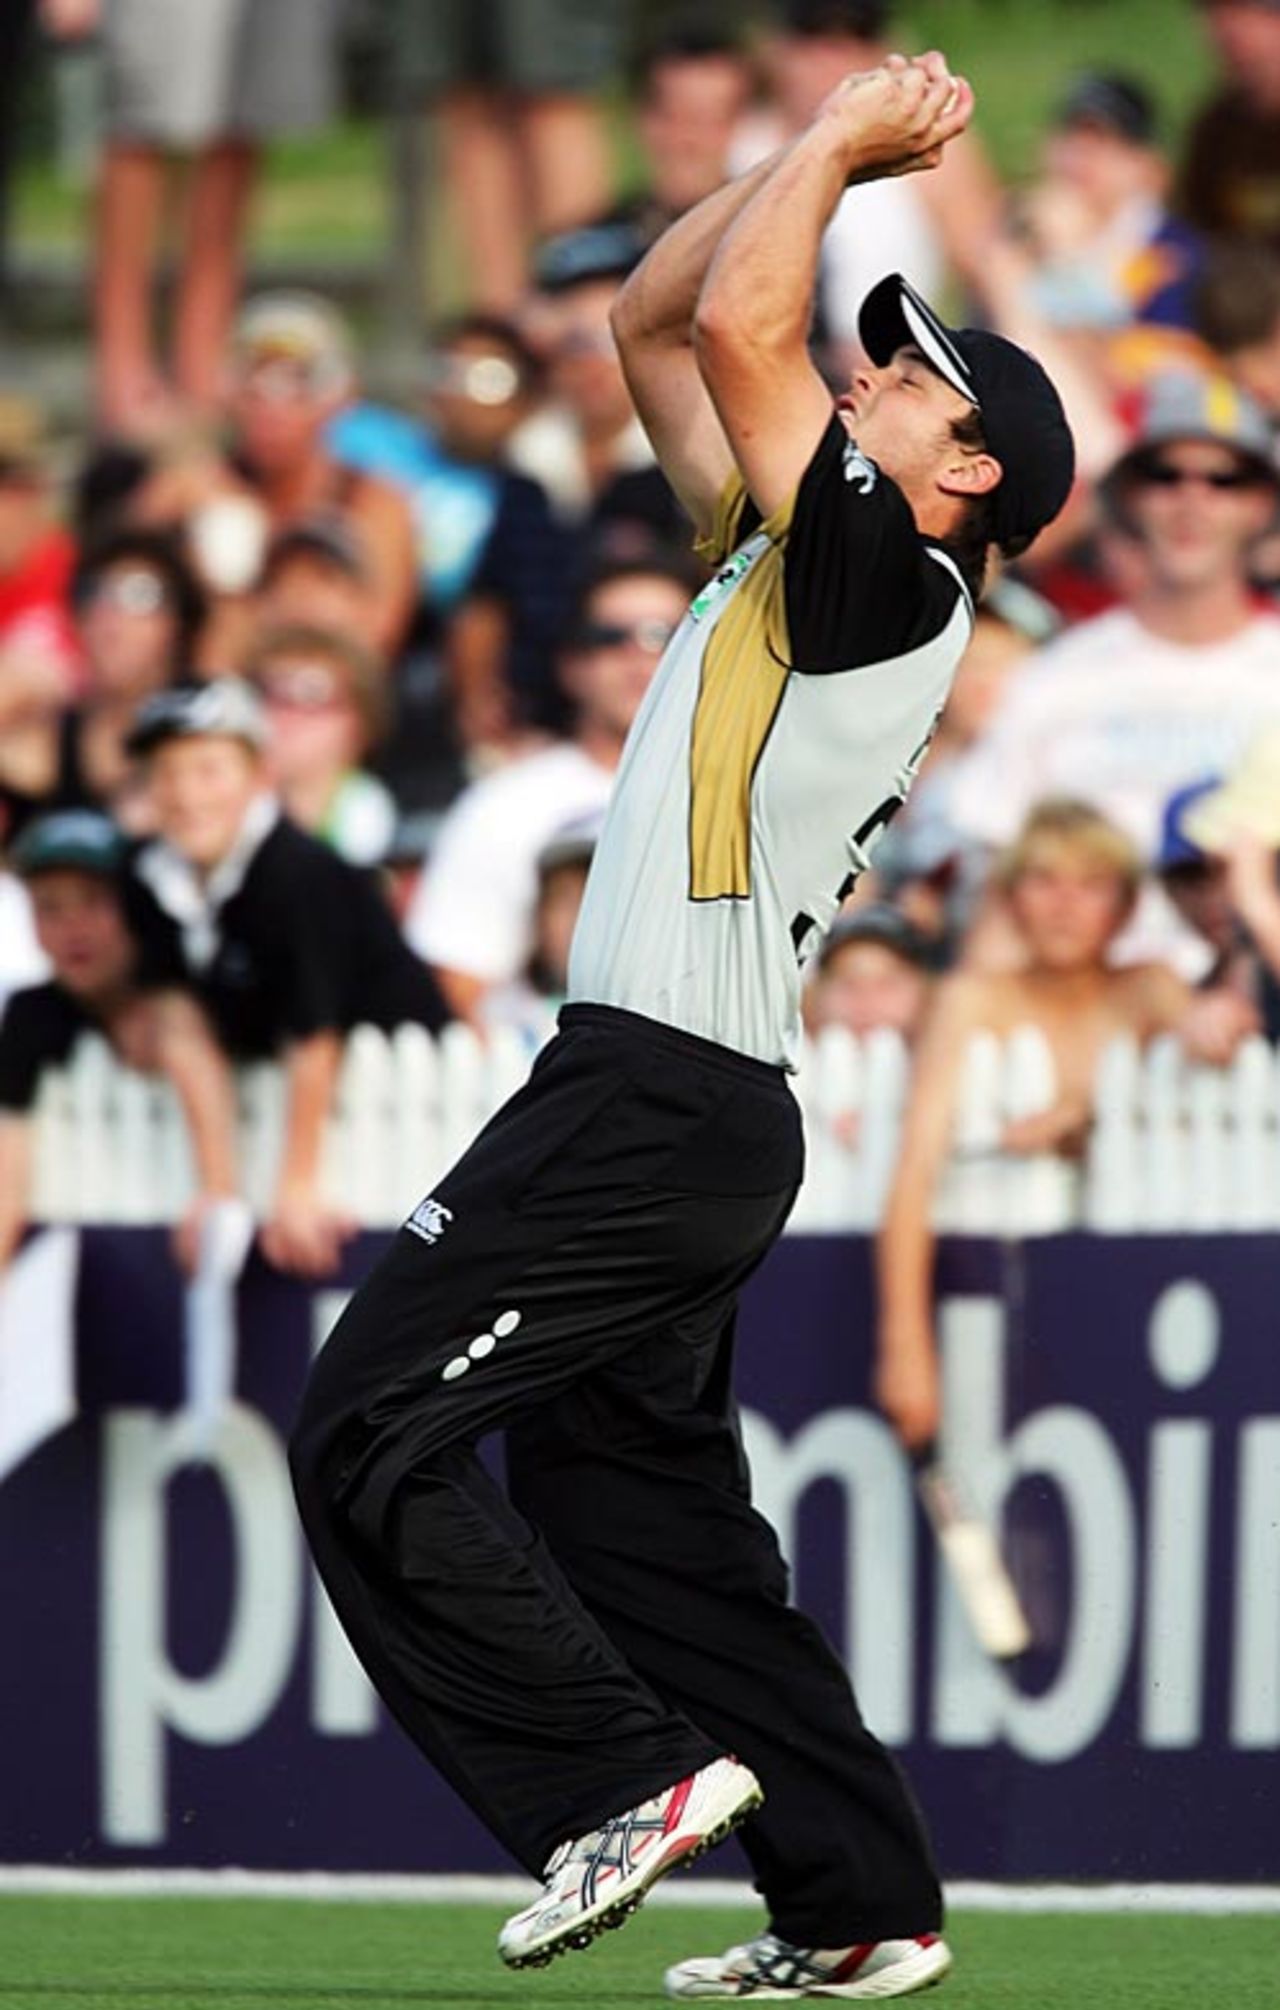 Daniel Flynn completes a catch easily, New Zealand v West Indies, 2nd Twenty20, Hamilton, December 28, 2008